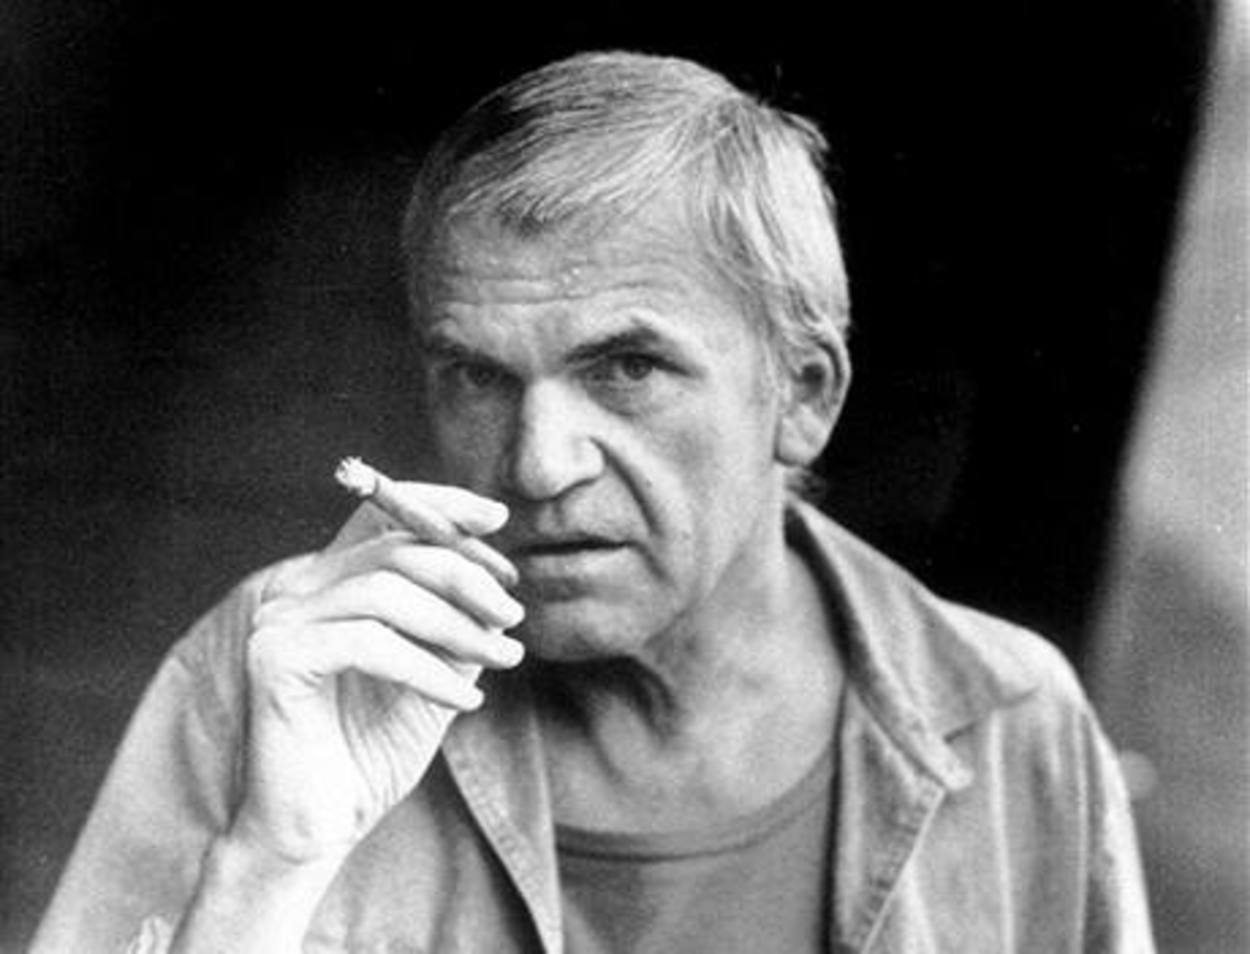 Kundera recupera nacionalidad checa